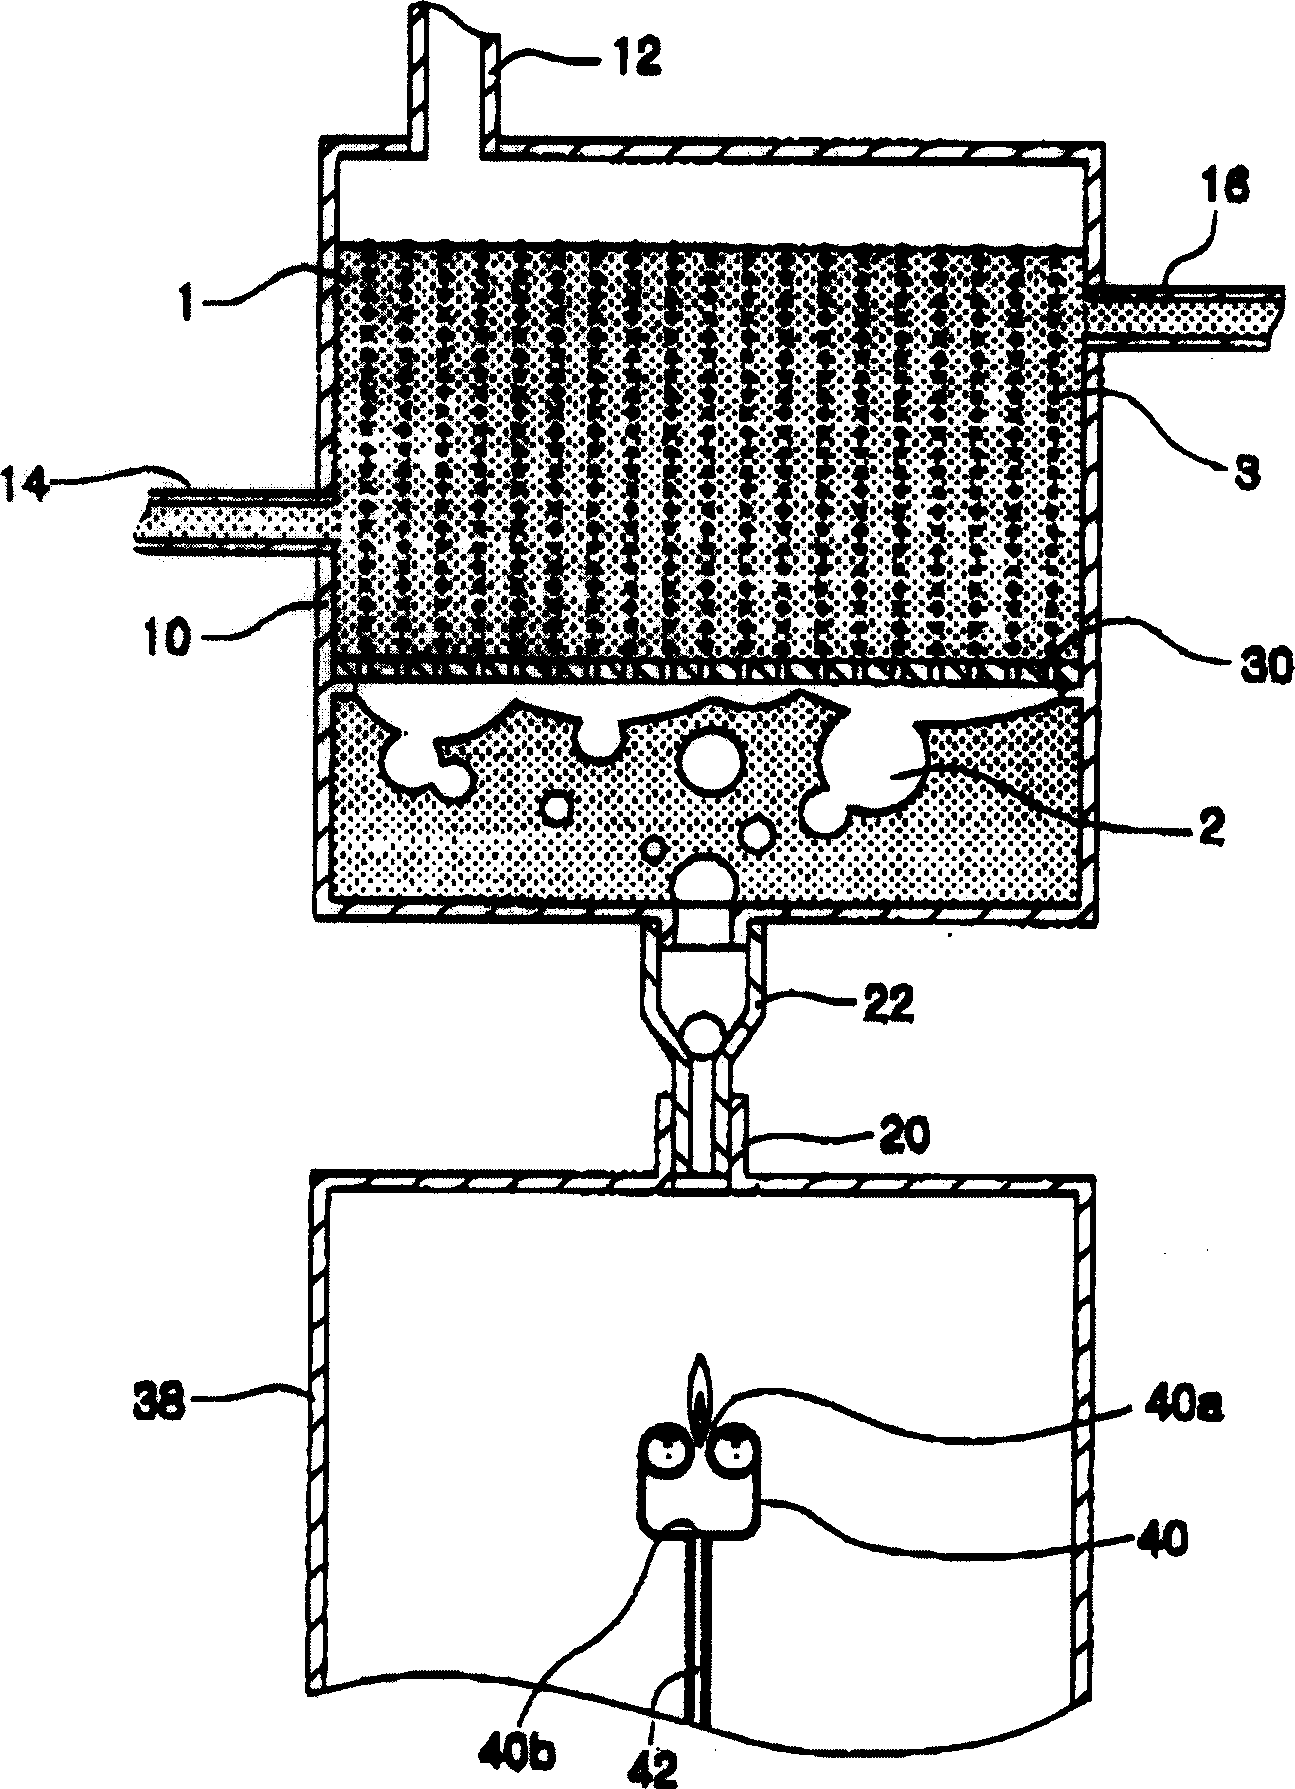 Heat exchanging type boiler